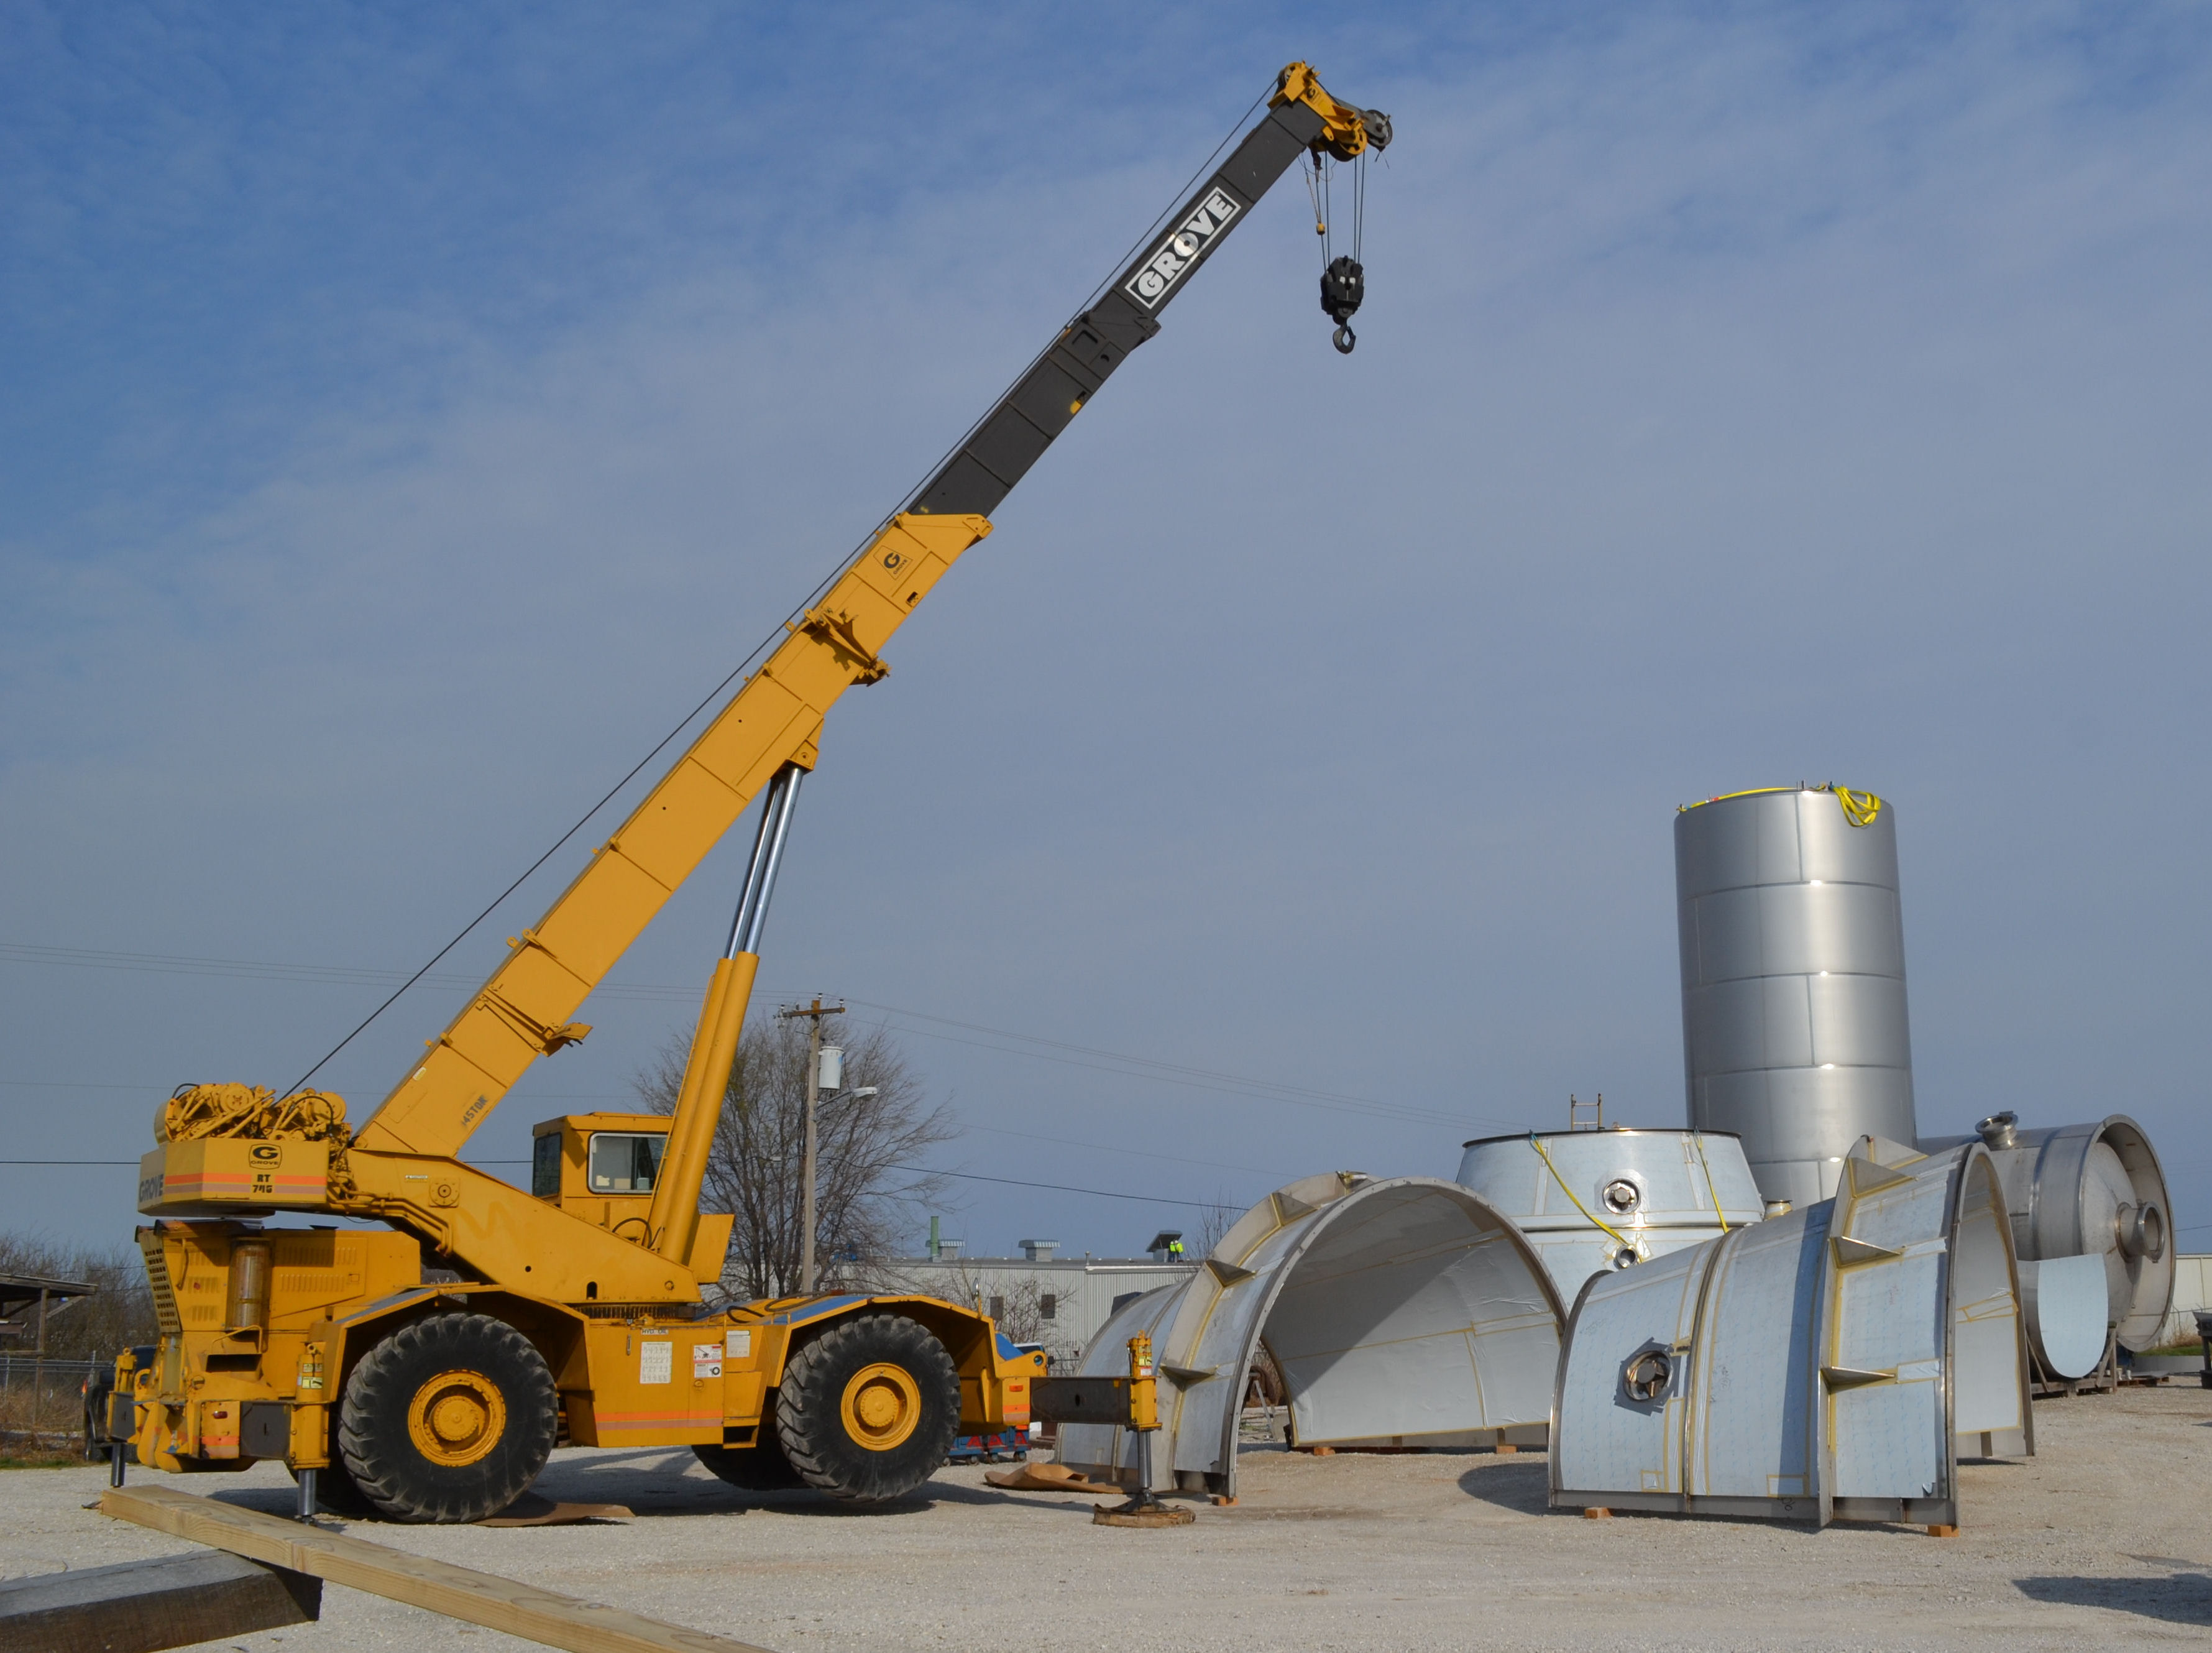 Mobile crane for safe and efficient material handling